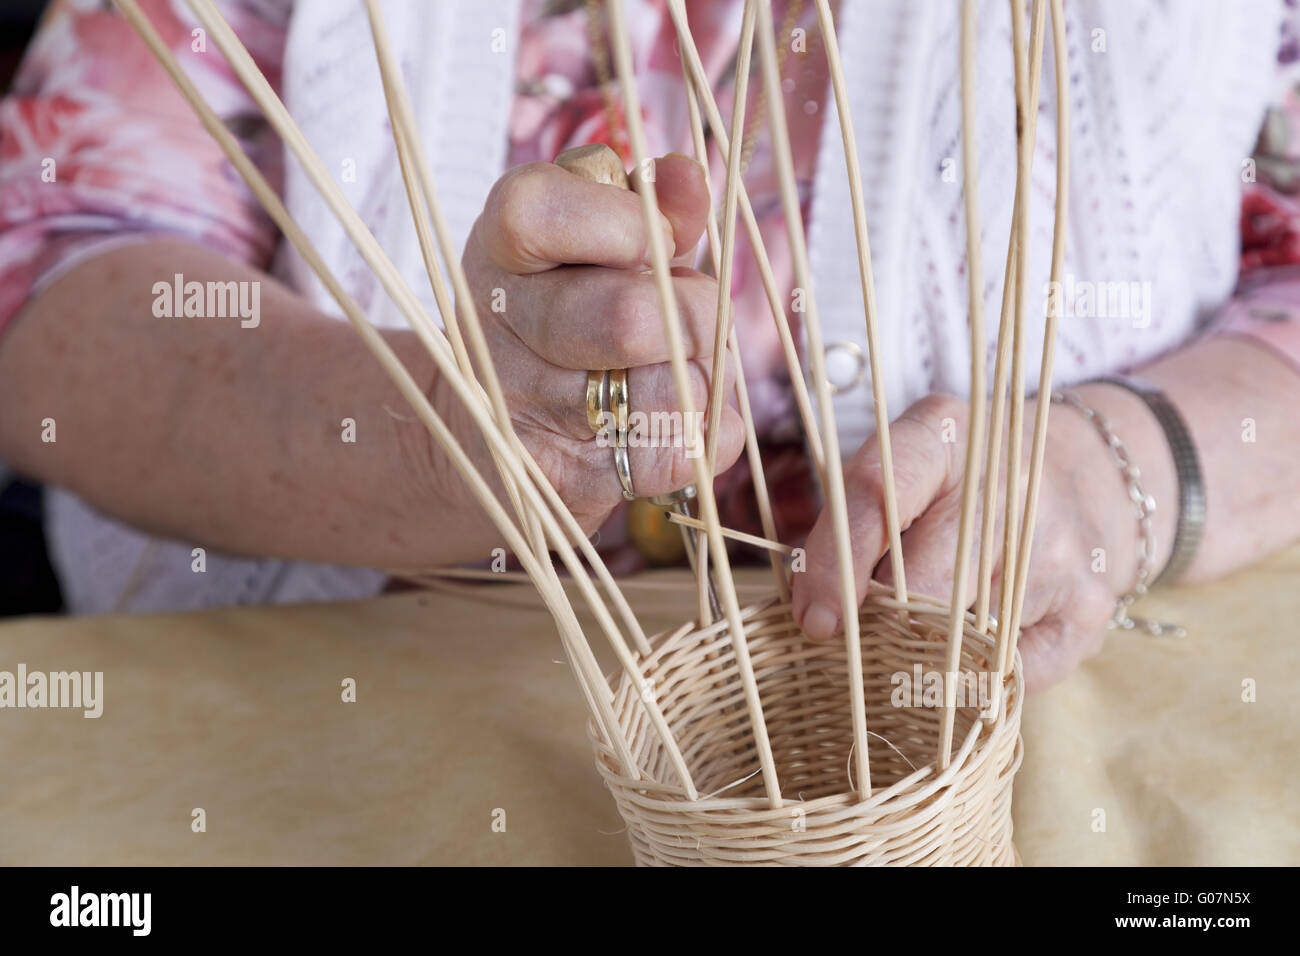 Hands of a novel senior citizen making baskets Stock Photo